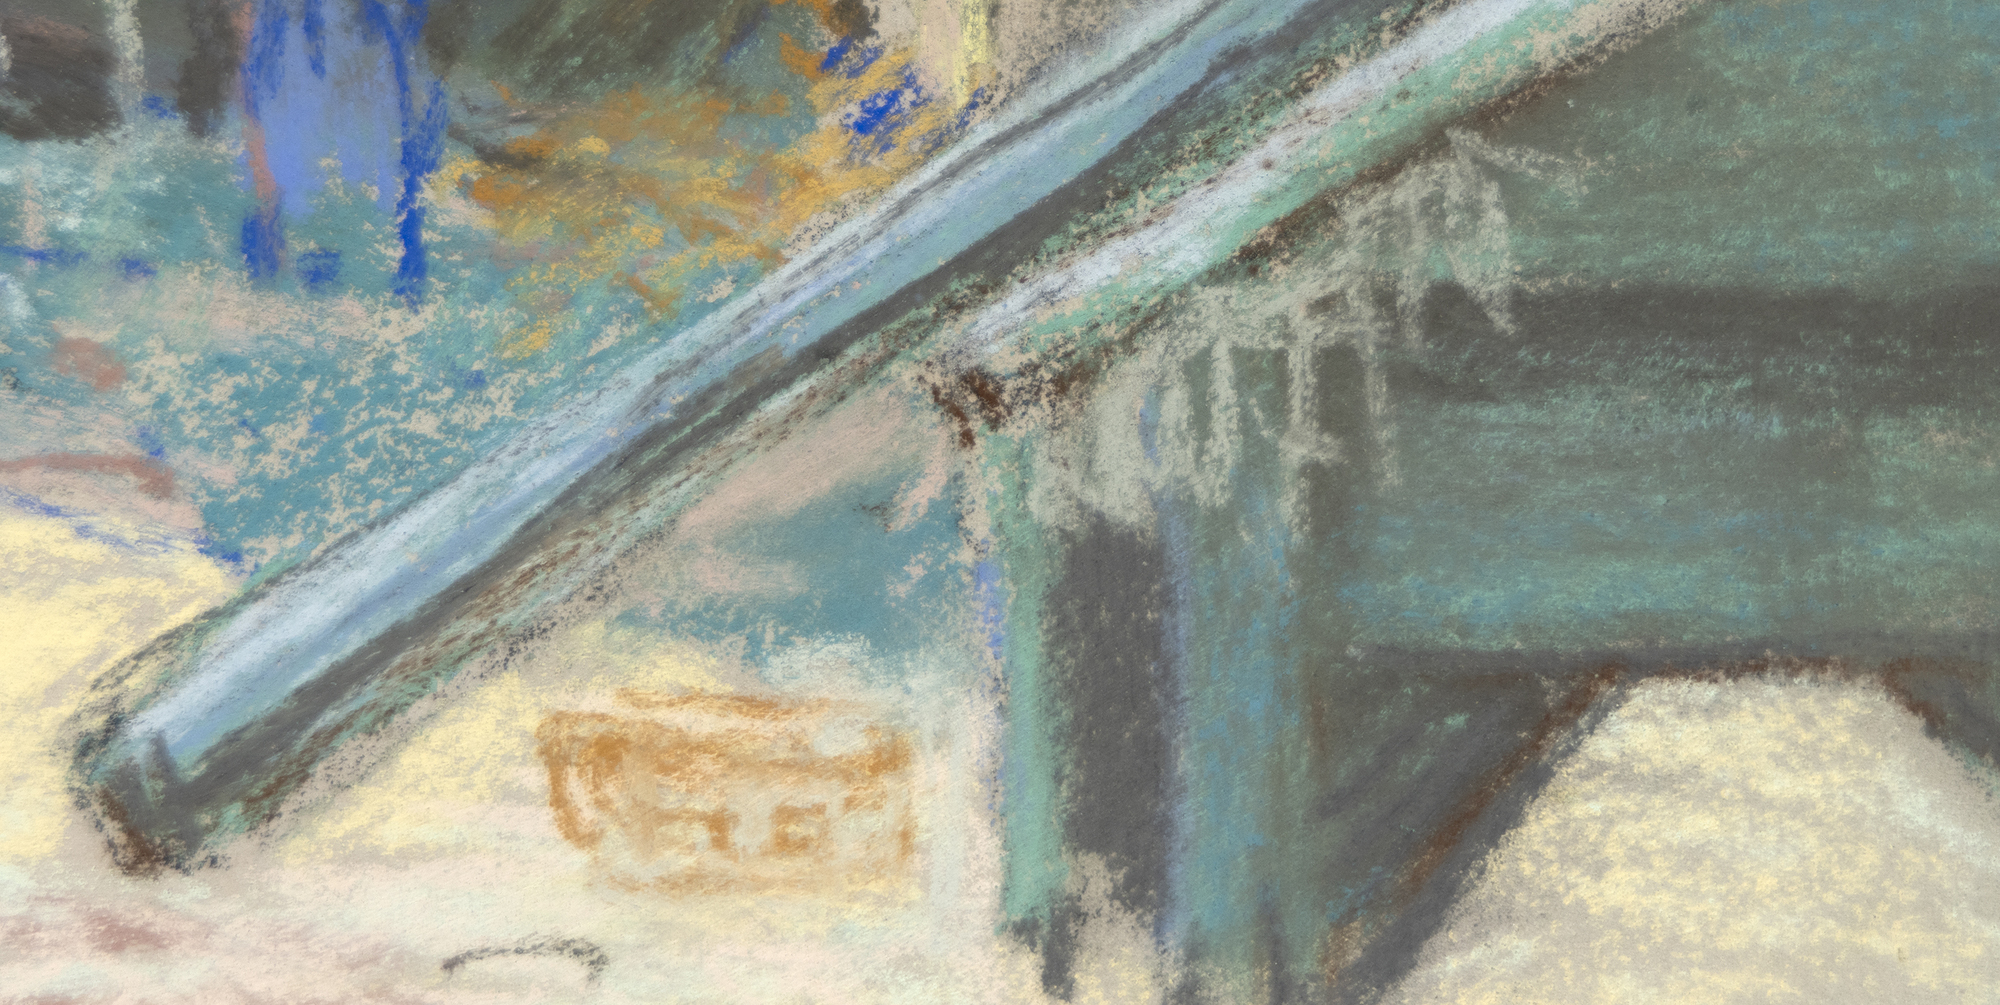 CAMILLE PISSARRO - Paysage avec batteuse a Montfoucault - pastel on paper laid down on board - 10 3/8 x 14 3/4 in.